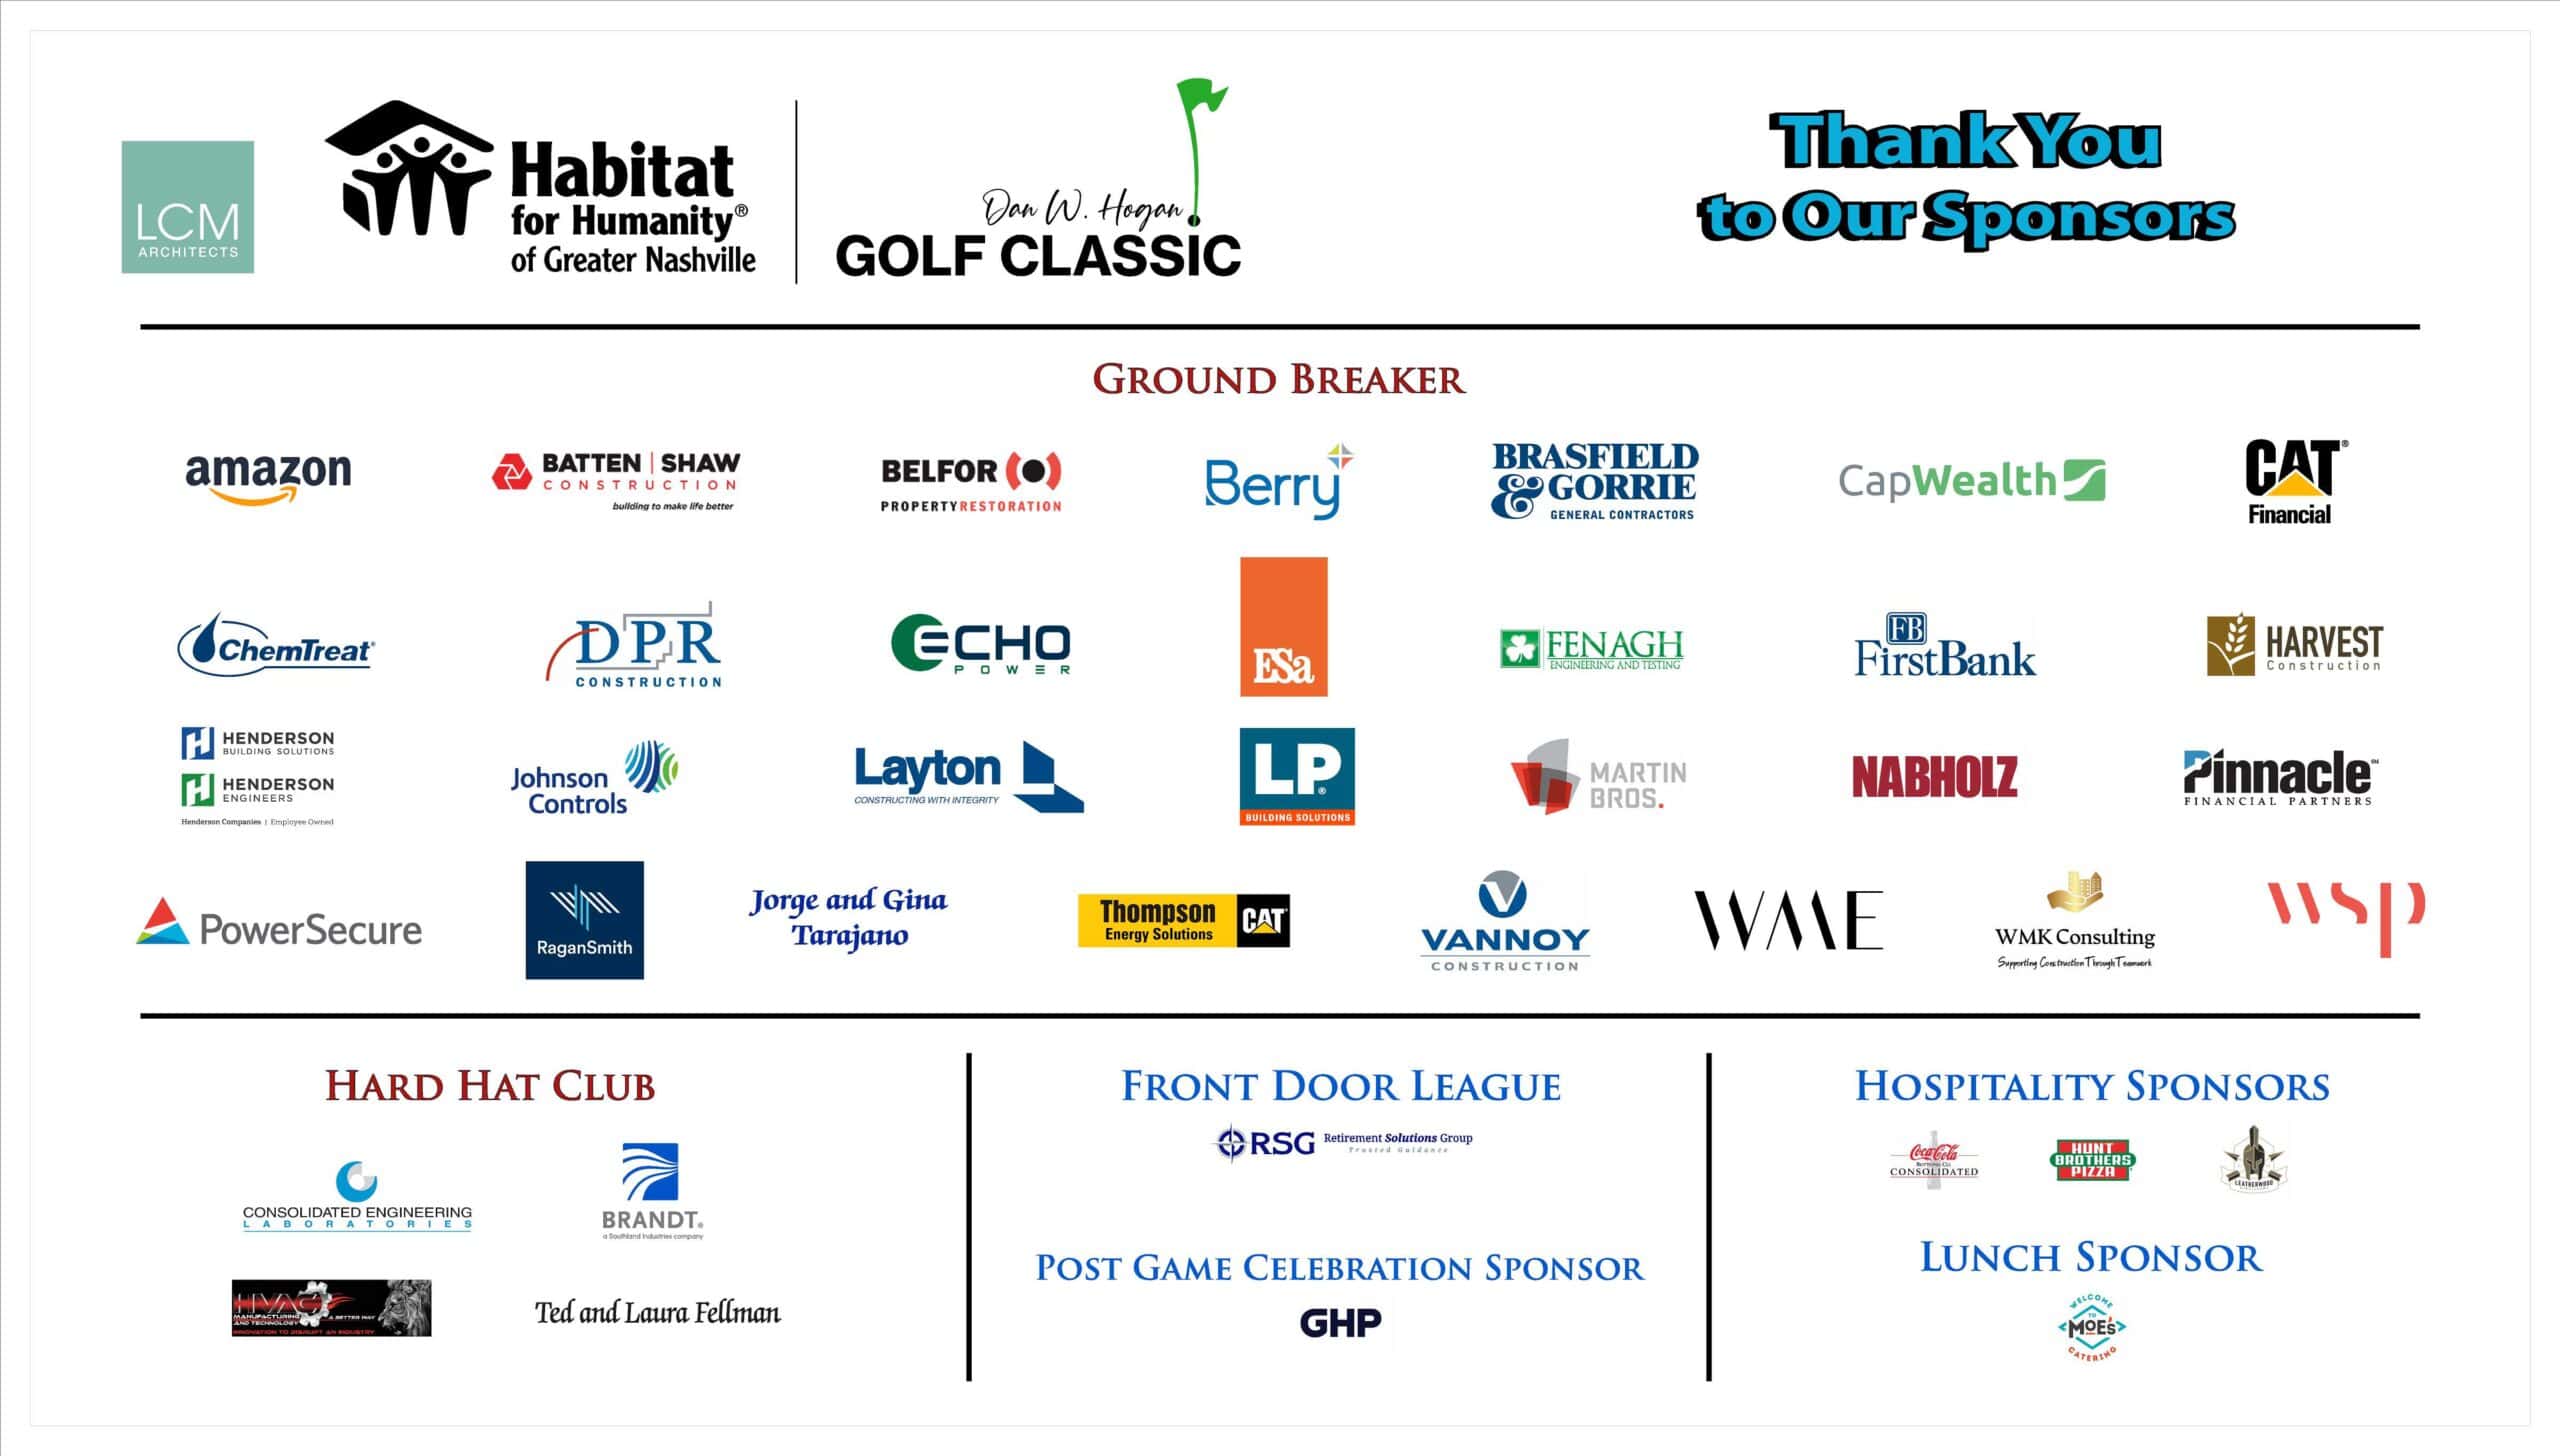 Thank you golf sponsors!